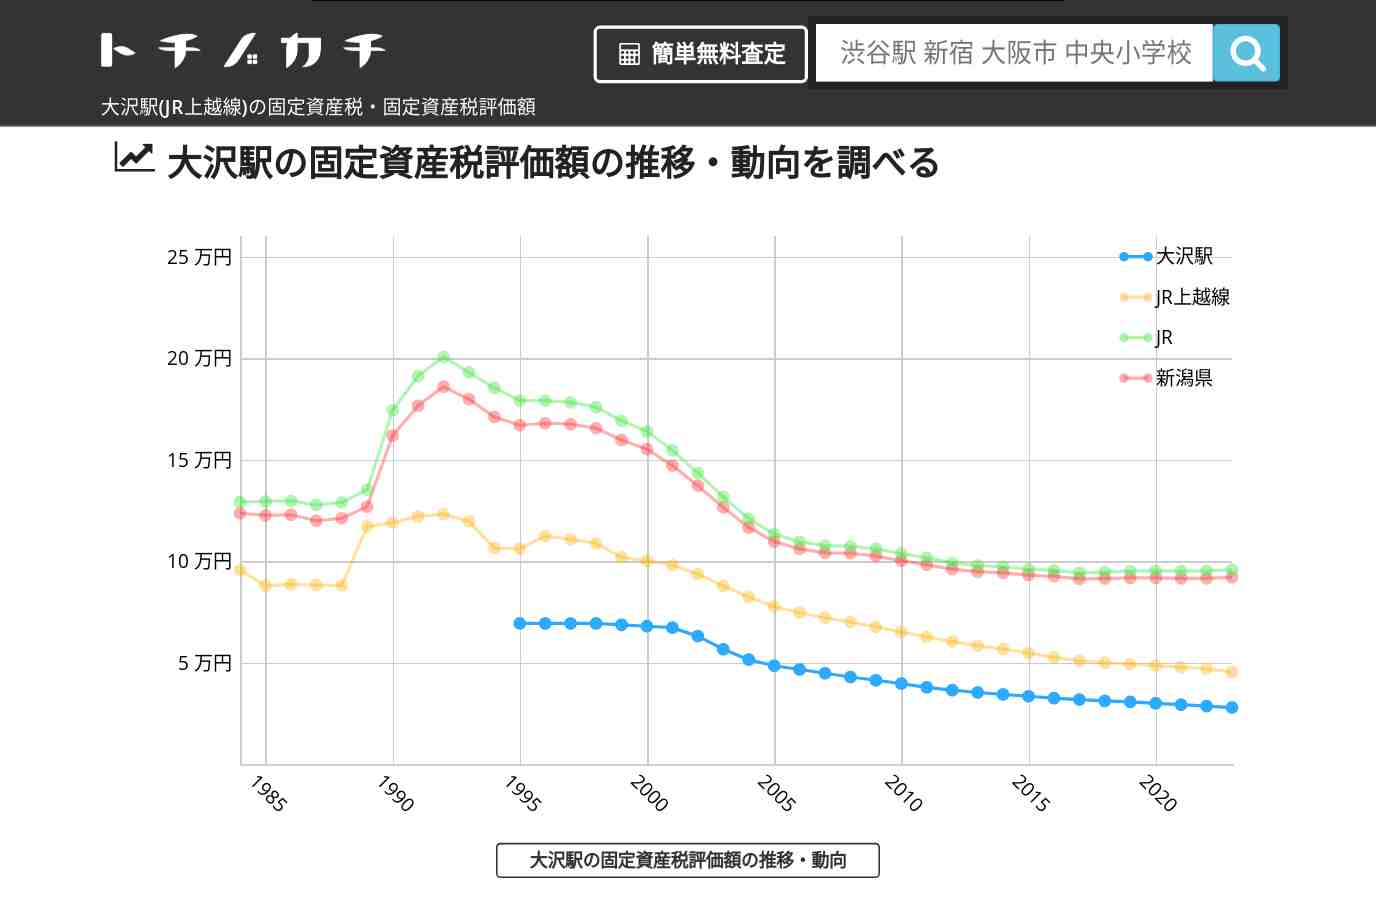 大沢駅(JR上越線)の固定資産税・固定資産税評価額 | トチノカチ